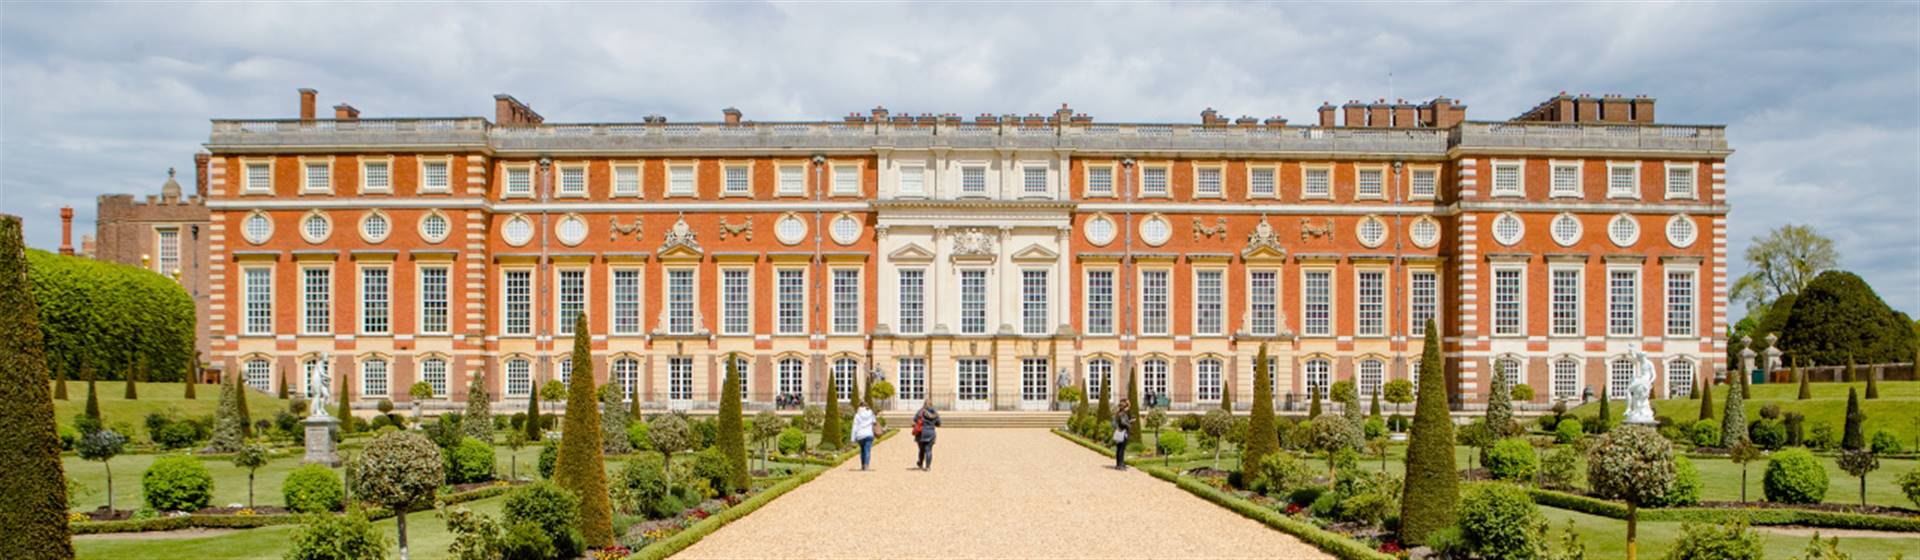 Hampton Court Palace - Historic Royal Palaces